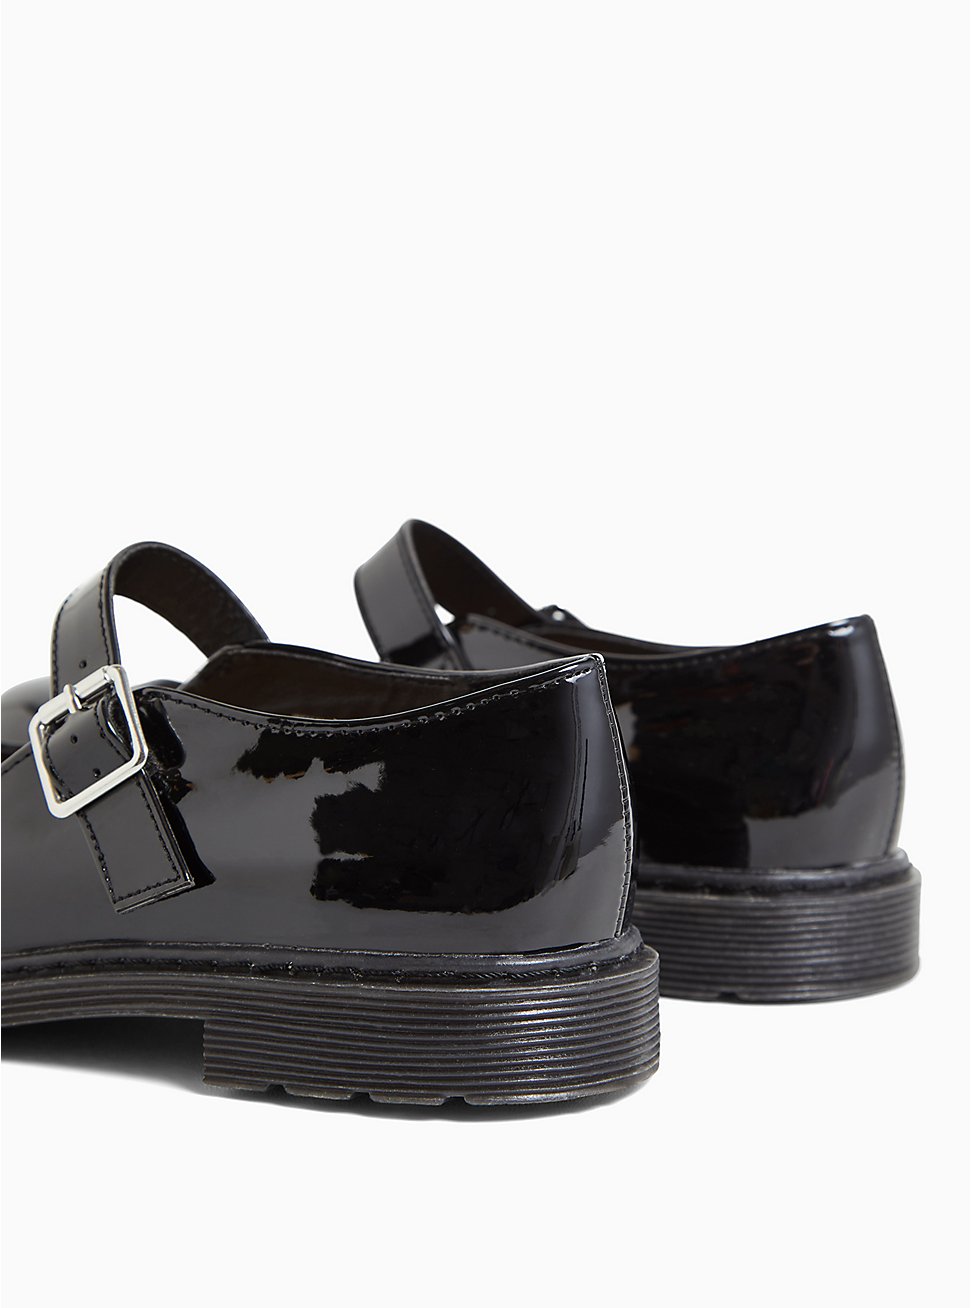 Cute Shiny-Patent-leather Flats single-shoes womens super plus size 52 college 